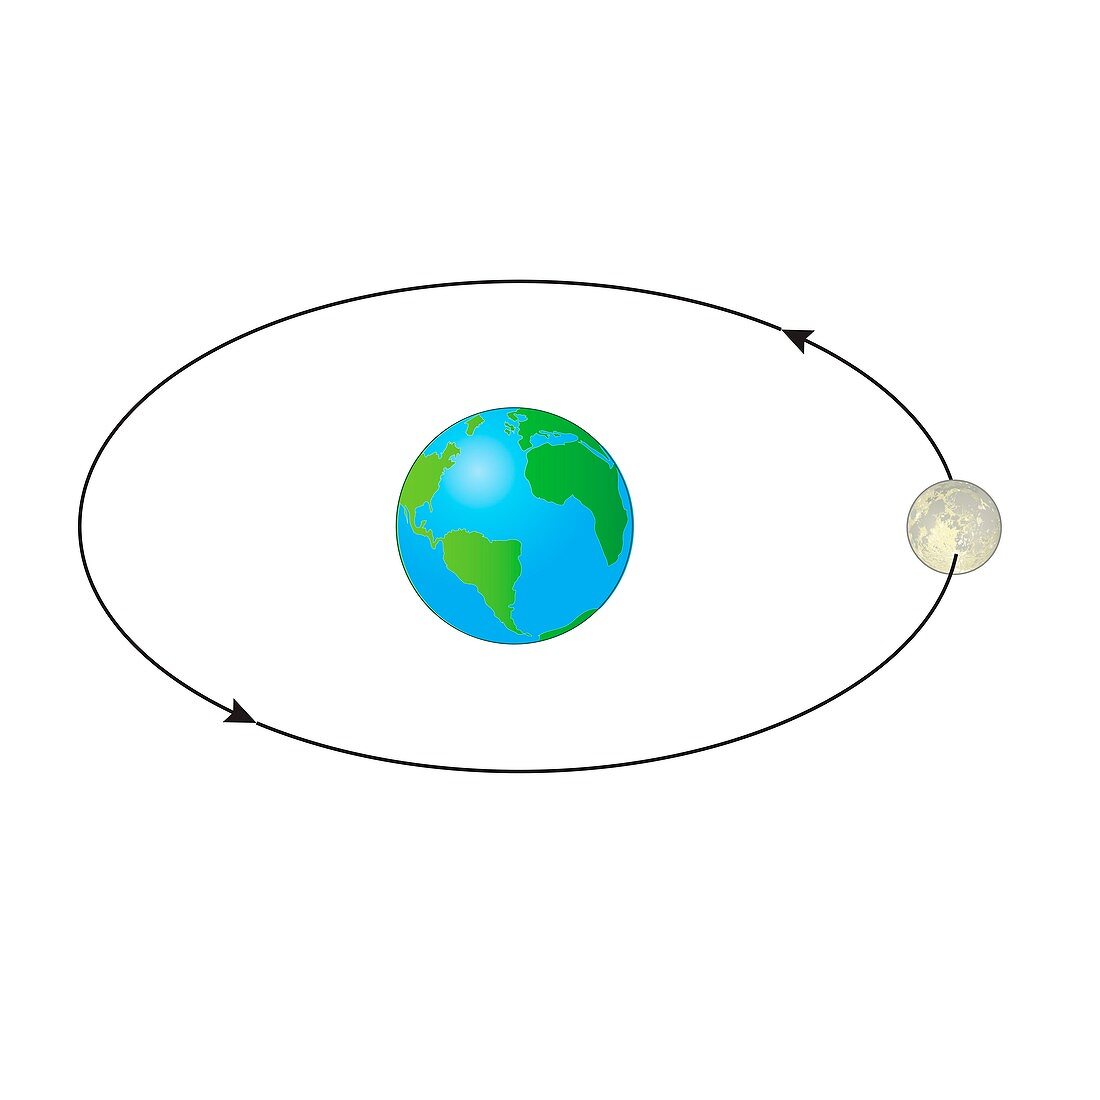 The Moon orbiting Earth, illustration